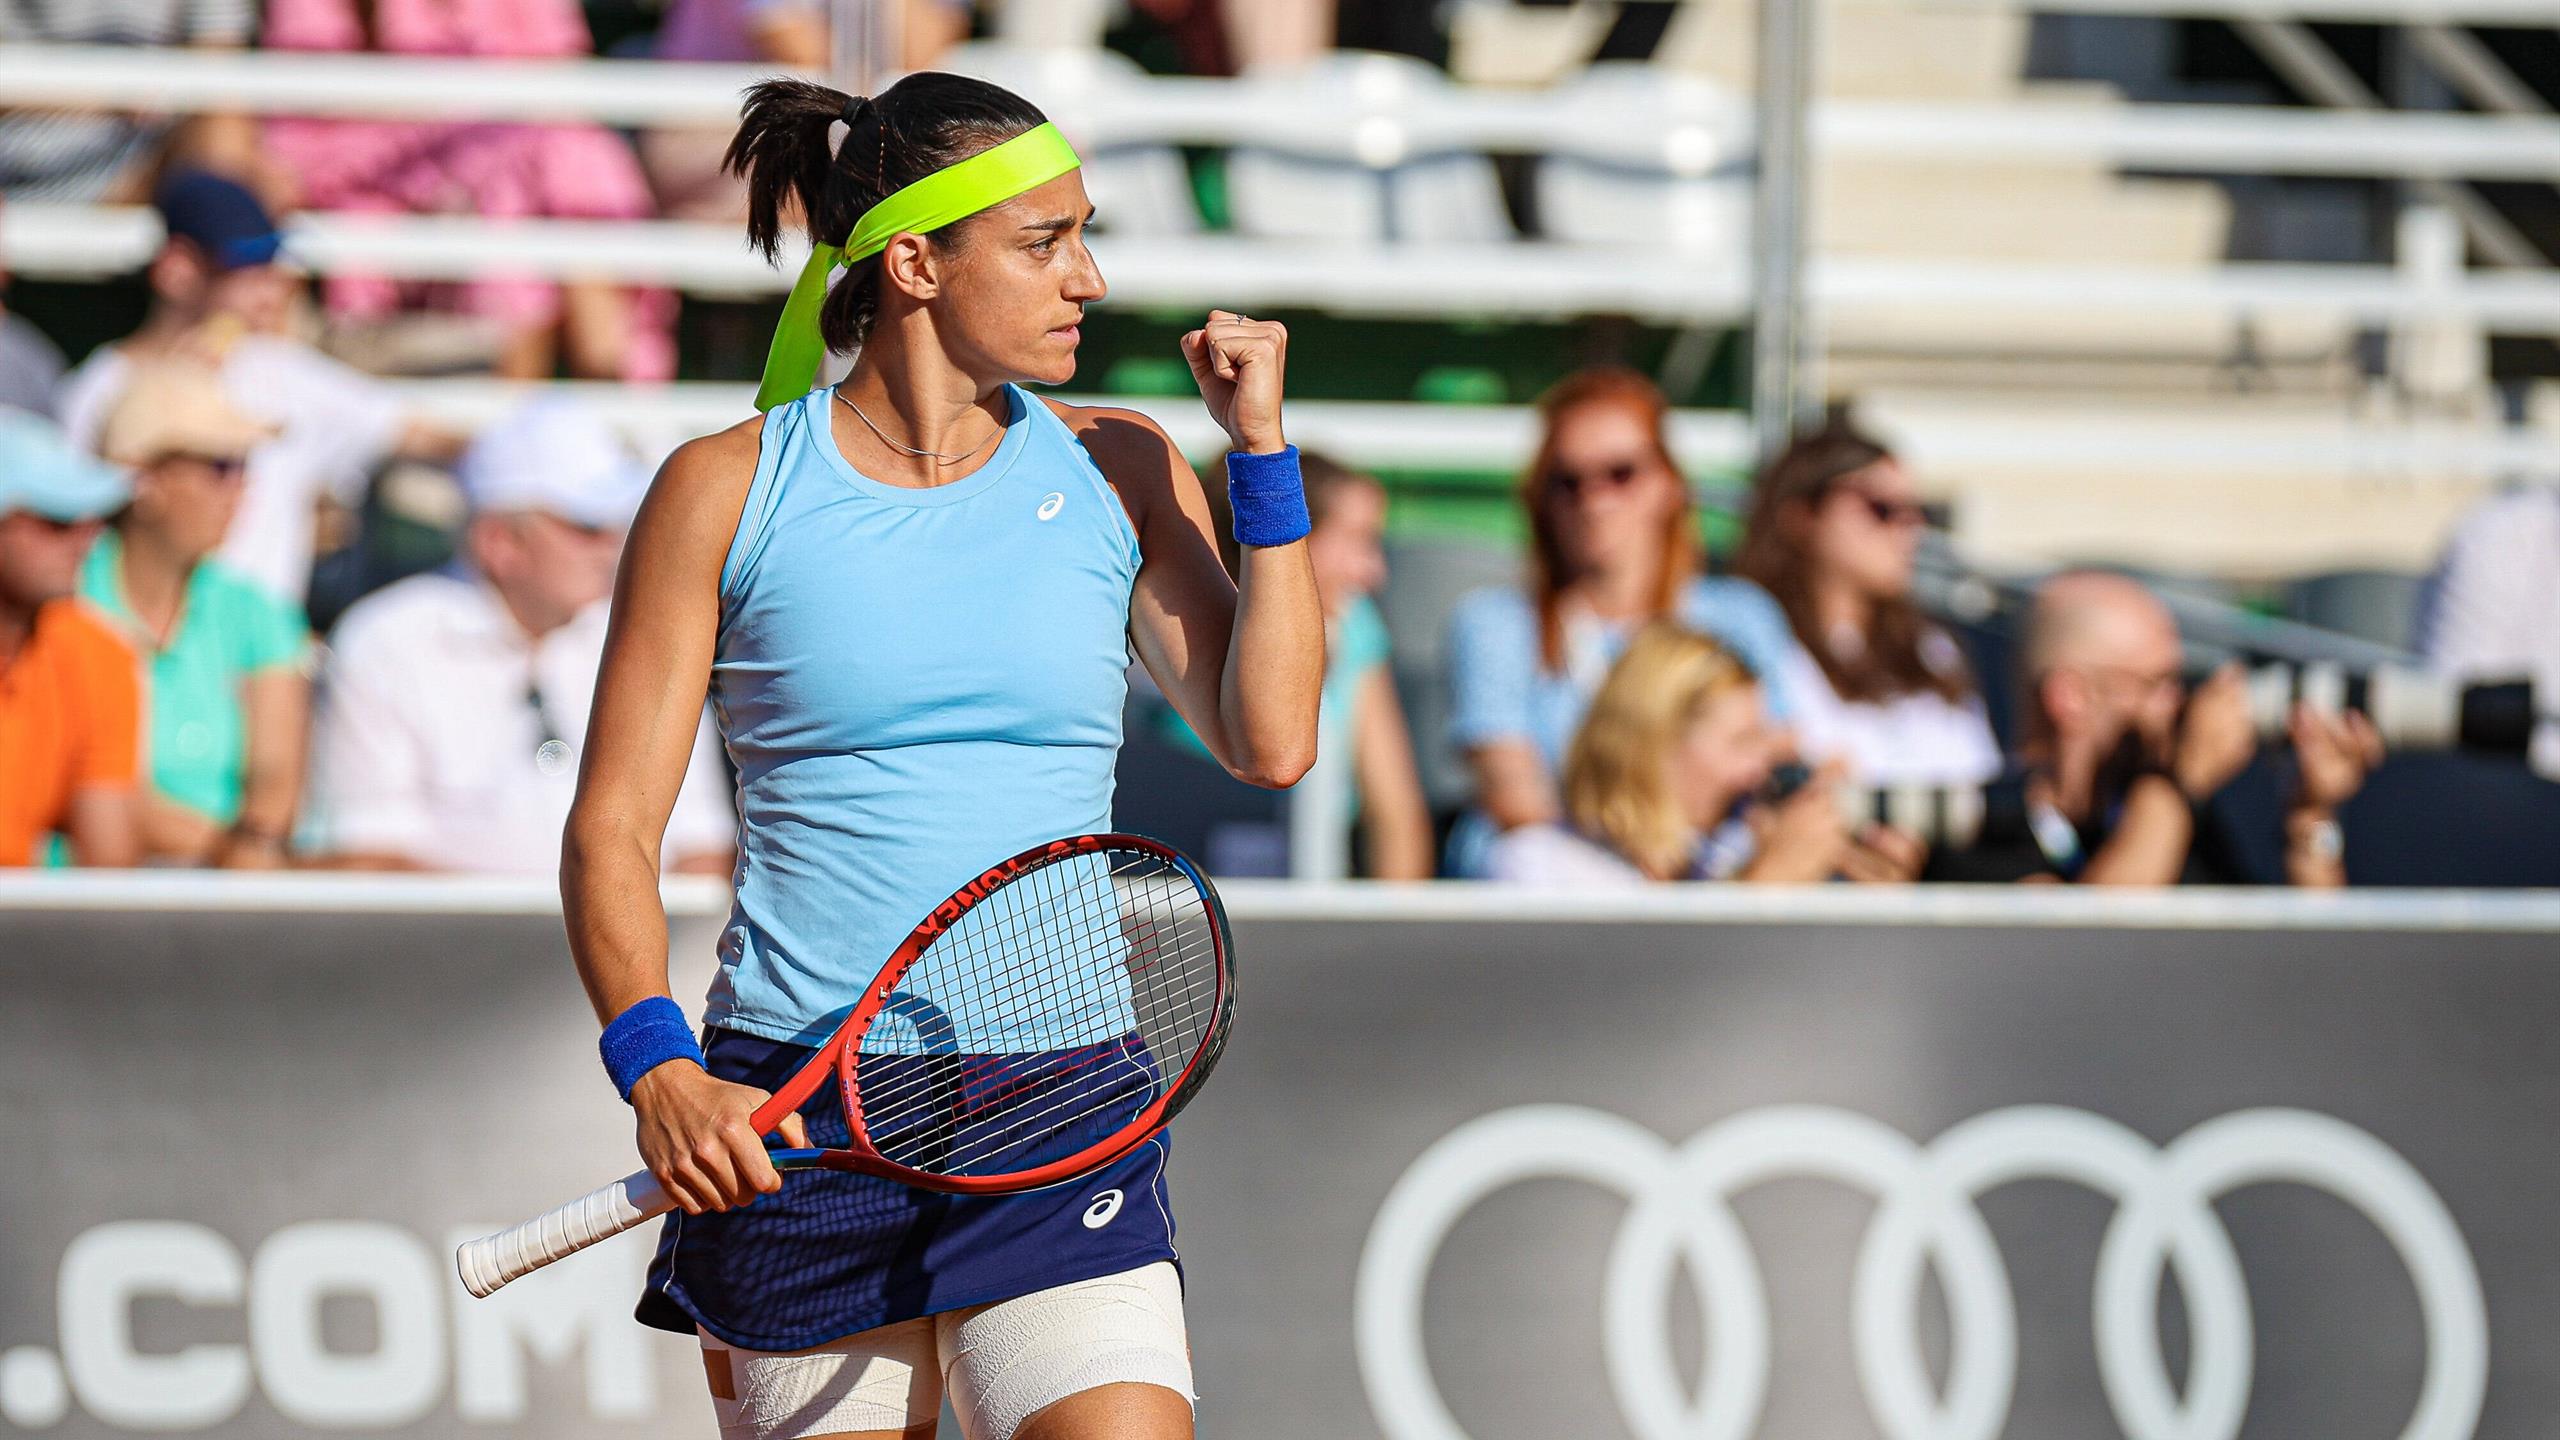 WTA Varsovie - Caroline Garcia bat Iga Swiatek en quarts (6-1, 1-6, 6-4), premier succès contre une n°1 mondiale - Eurosport FR